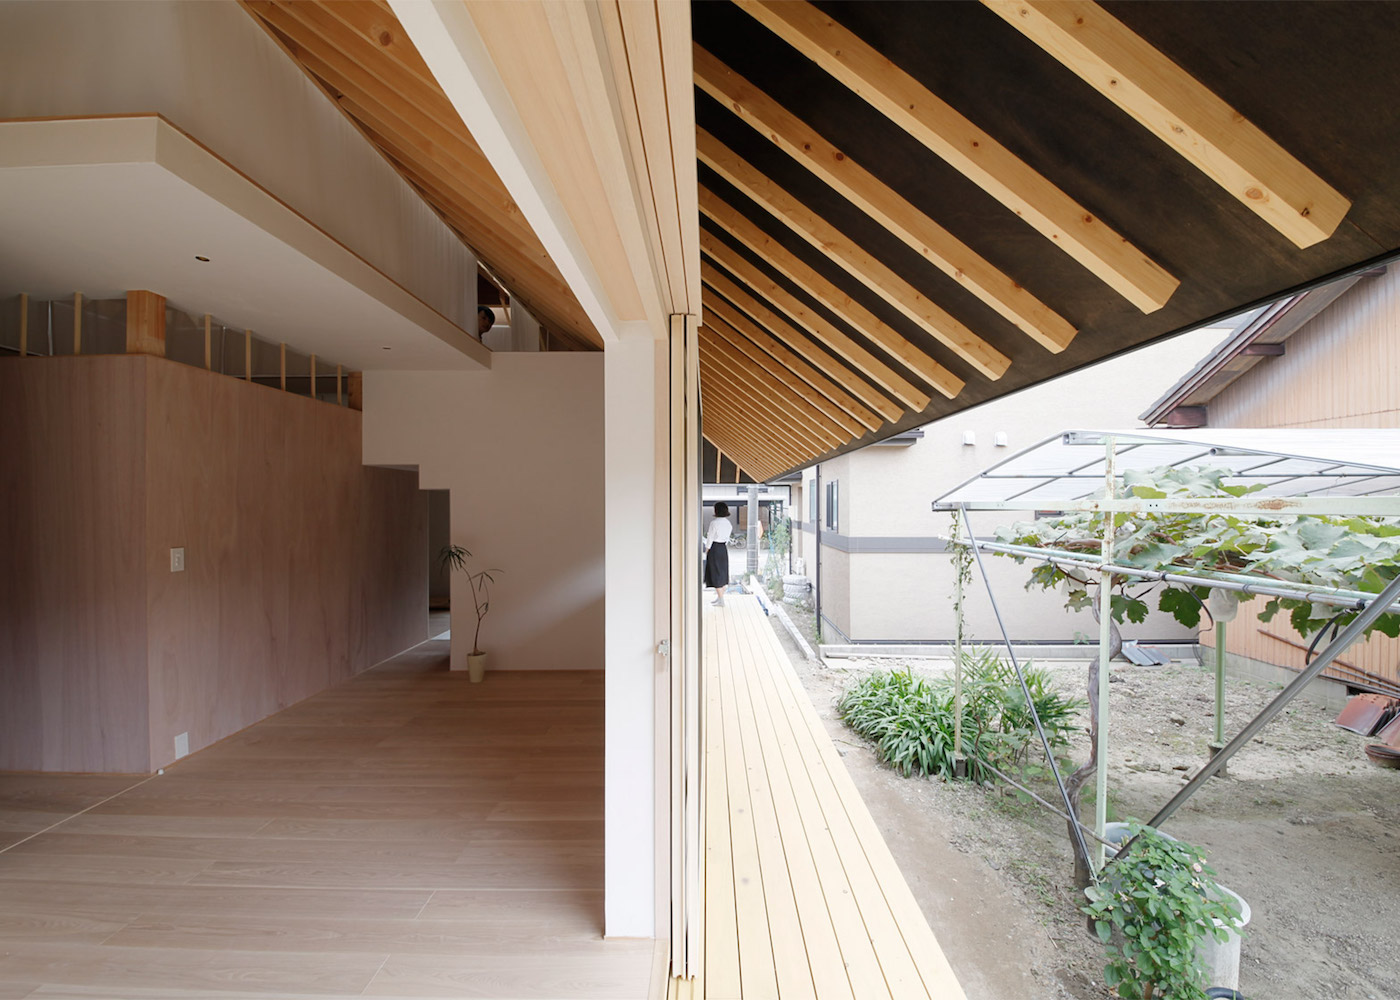 Wengawa House by Katsutoshi Sasaki + Associates